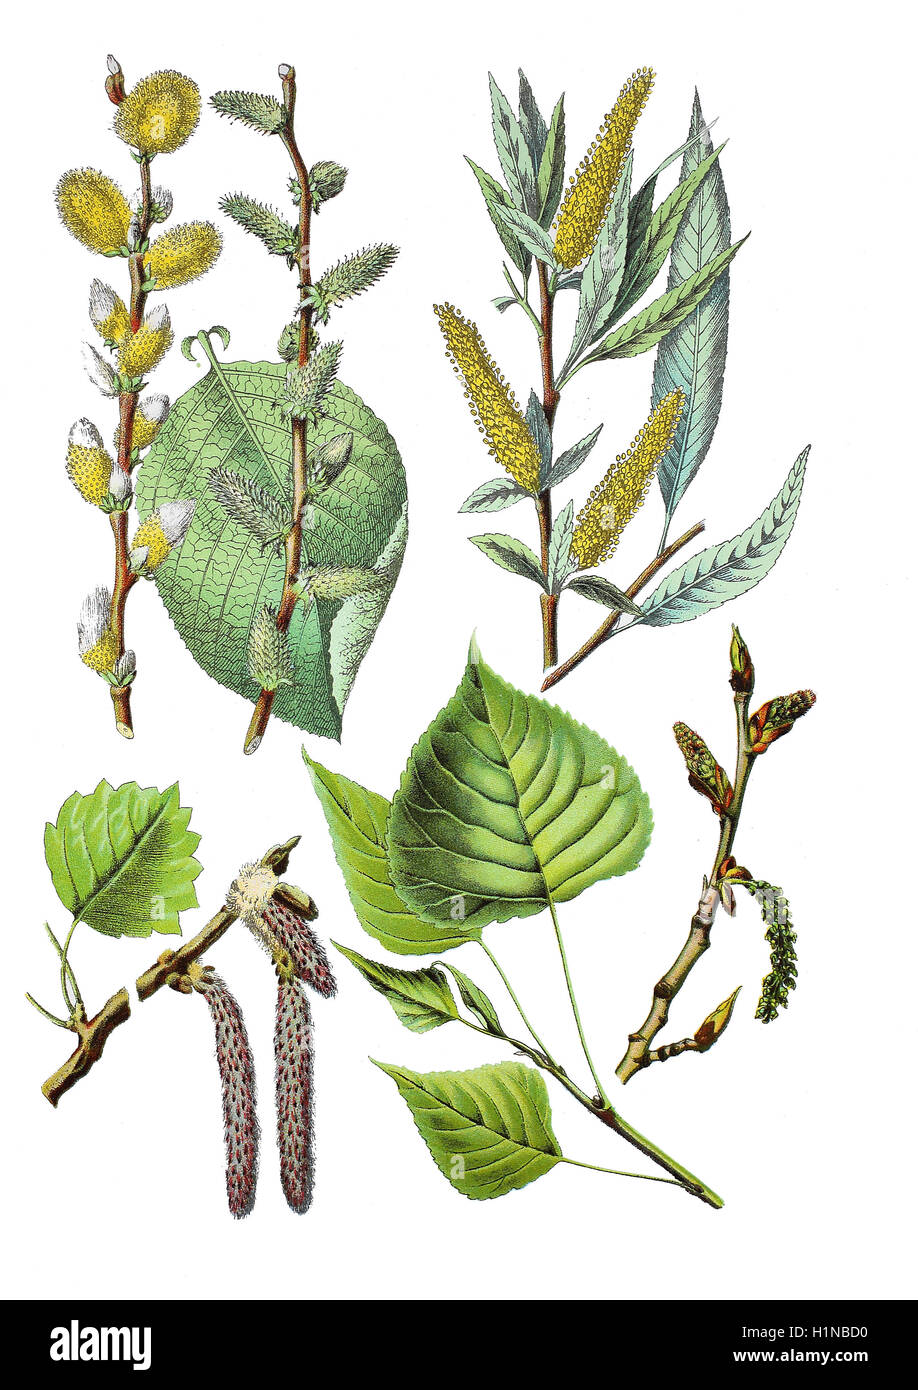 goat willow, Salix caprea (top left), crack willow, Salix fragilis (top right), common aspen, Populus tremula (bottem left), black poplar, Populus nigra (bottem right) Stock Photo